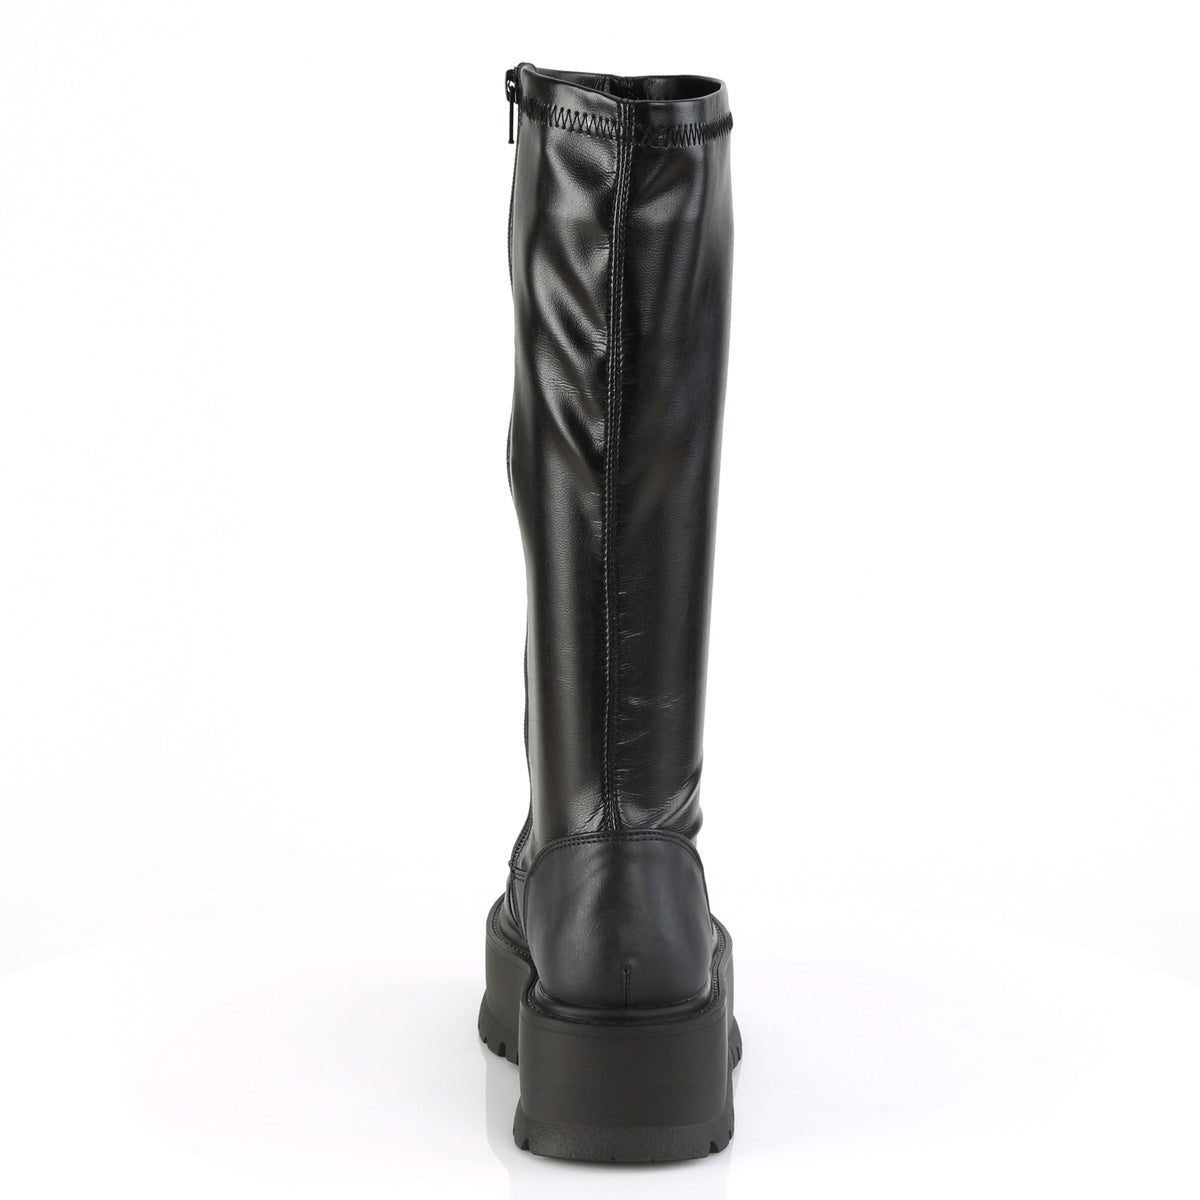 SLACKER-200 - Black Vegan Leather Boots